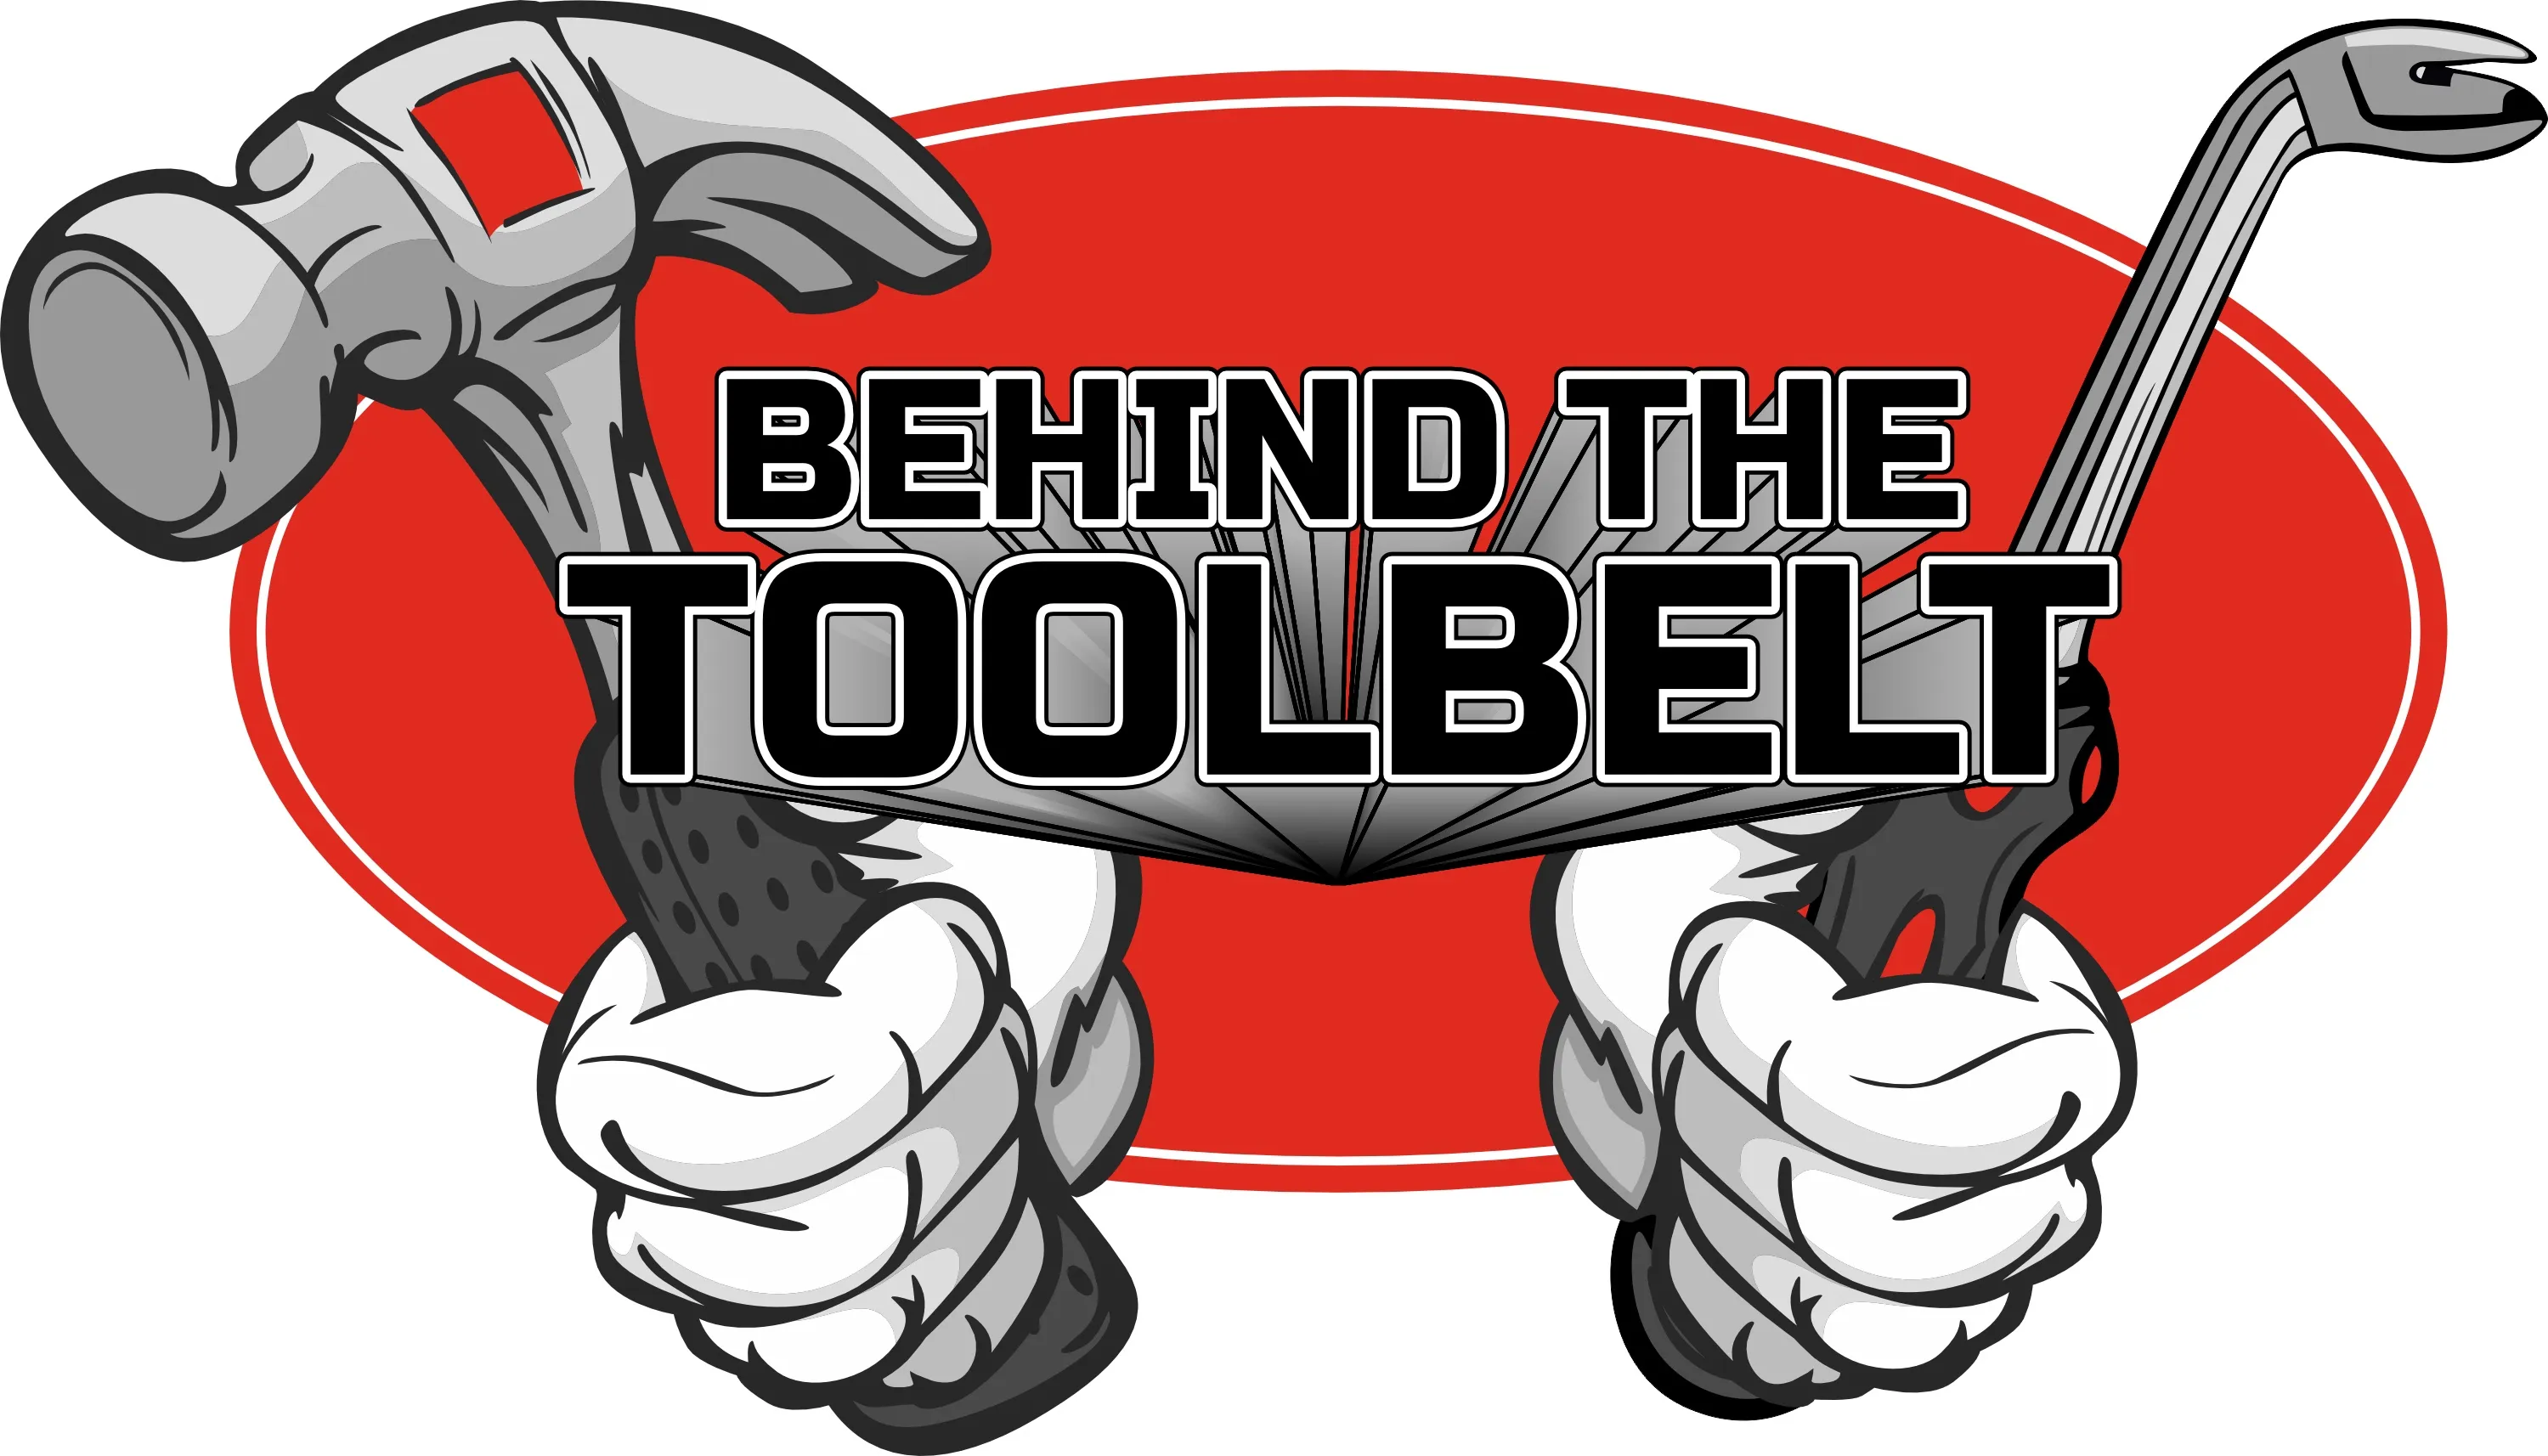 Behind the Toolbelt logo